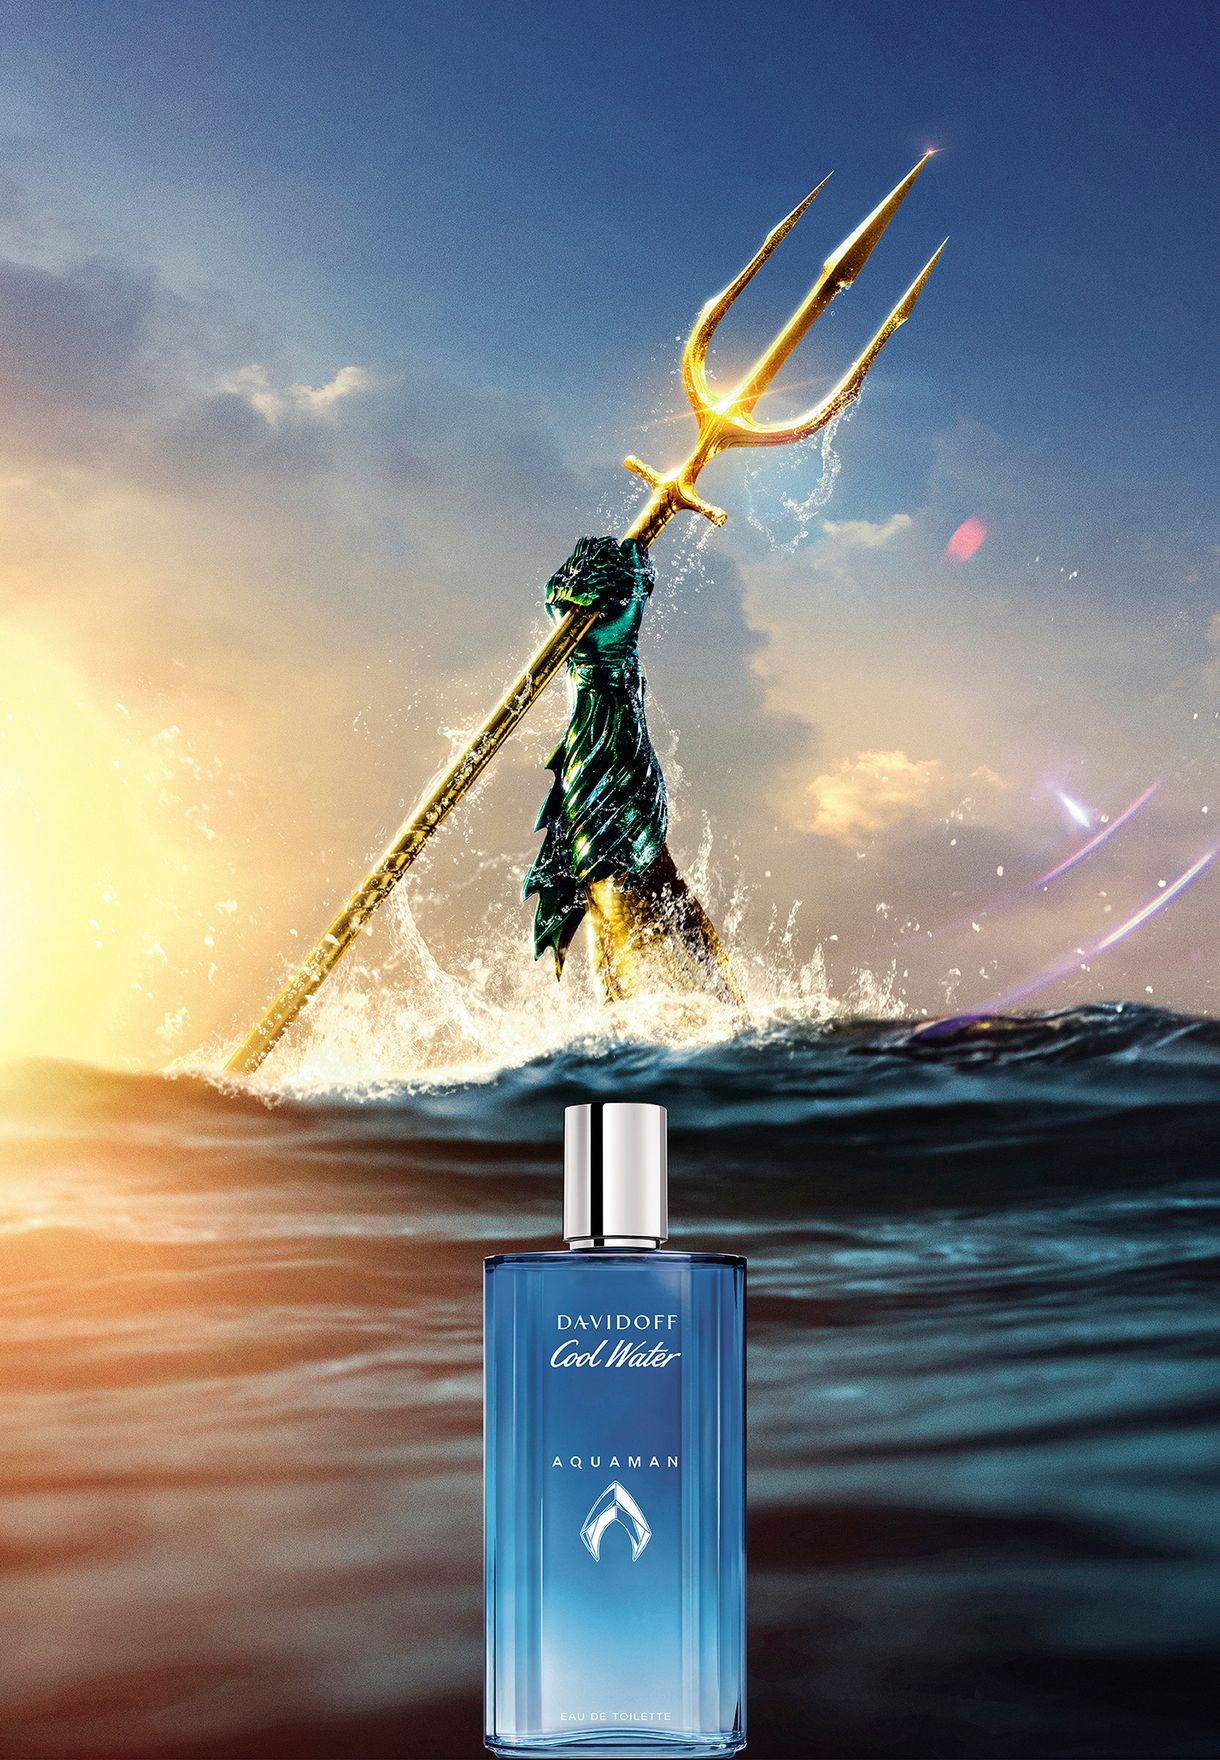 Davidoff Cool Water Man Collector's Edition Aquaman Eau de Toilette  พบกับต้นกำเนิดแห่งขุมพลังจาก Cool Water Collection คอลเลคชั่นพิเศษจากหนังสุดโด่งดัง Aquaman กลิ่นหอมสดชื่นสำหรับสุภาพบุรุษ ตอบรับเสียงเรียกร้องจากท้องทะเลเพื่อให้คุณได้ดำดิ่งสู่การผจญภัย เพื่อสร้างตำนานในแบบของคุณเอง